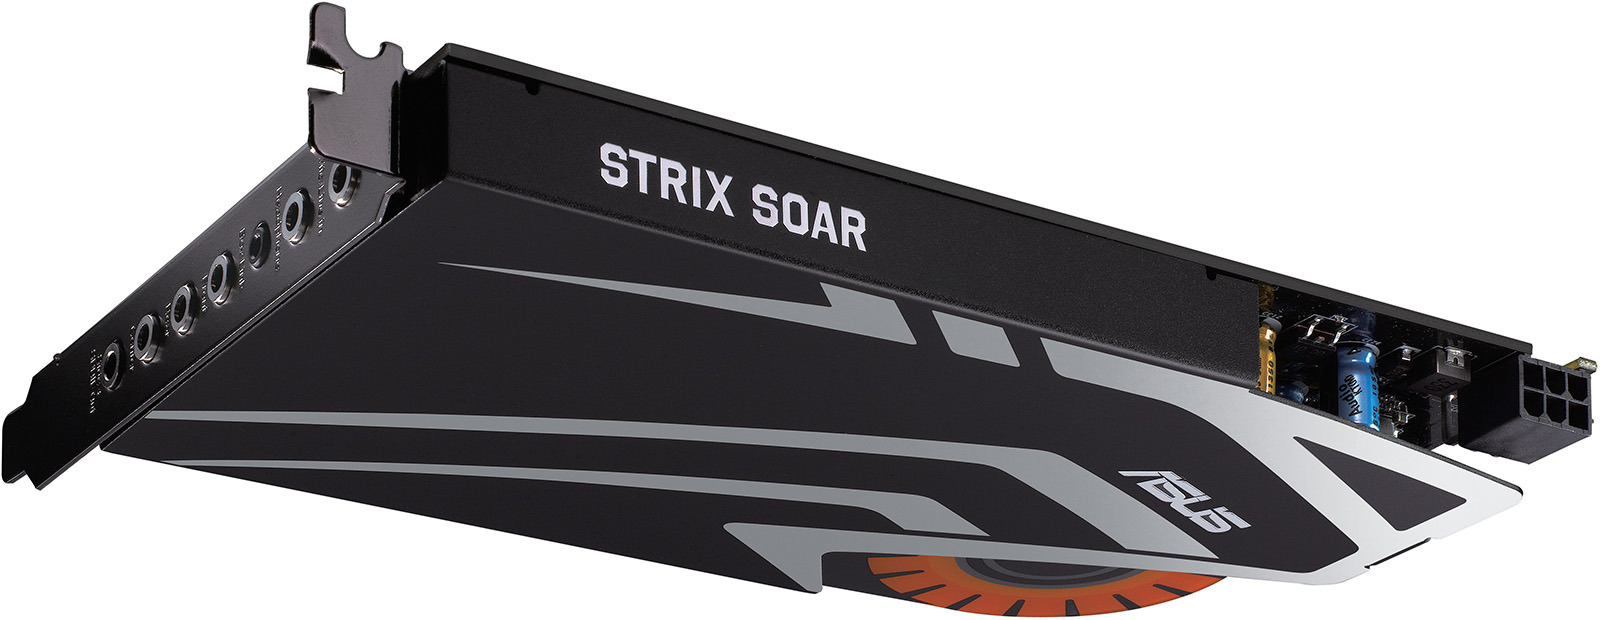 фото Звуковая карта ASUS PCI-E Strix Soar (C-Media 6632AX), STRIX SOAR